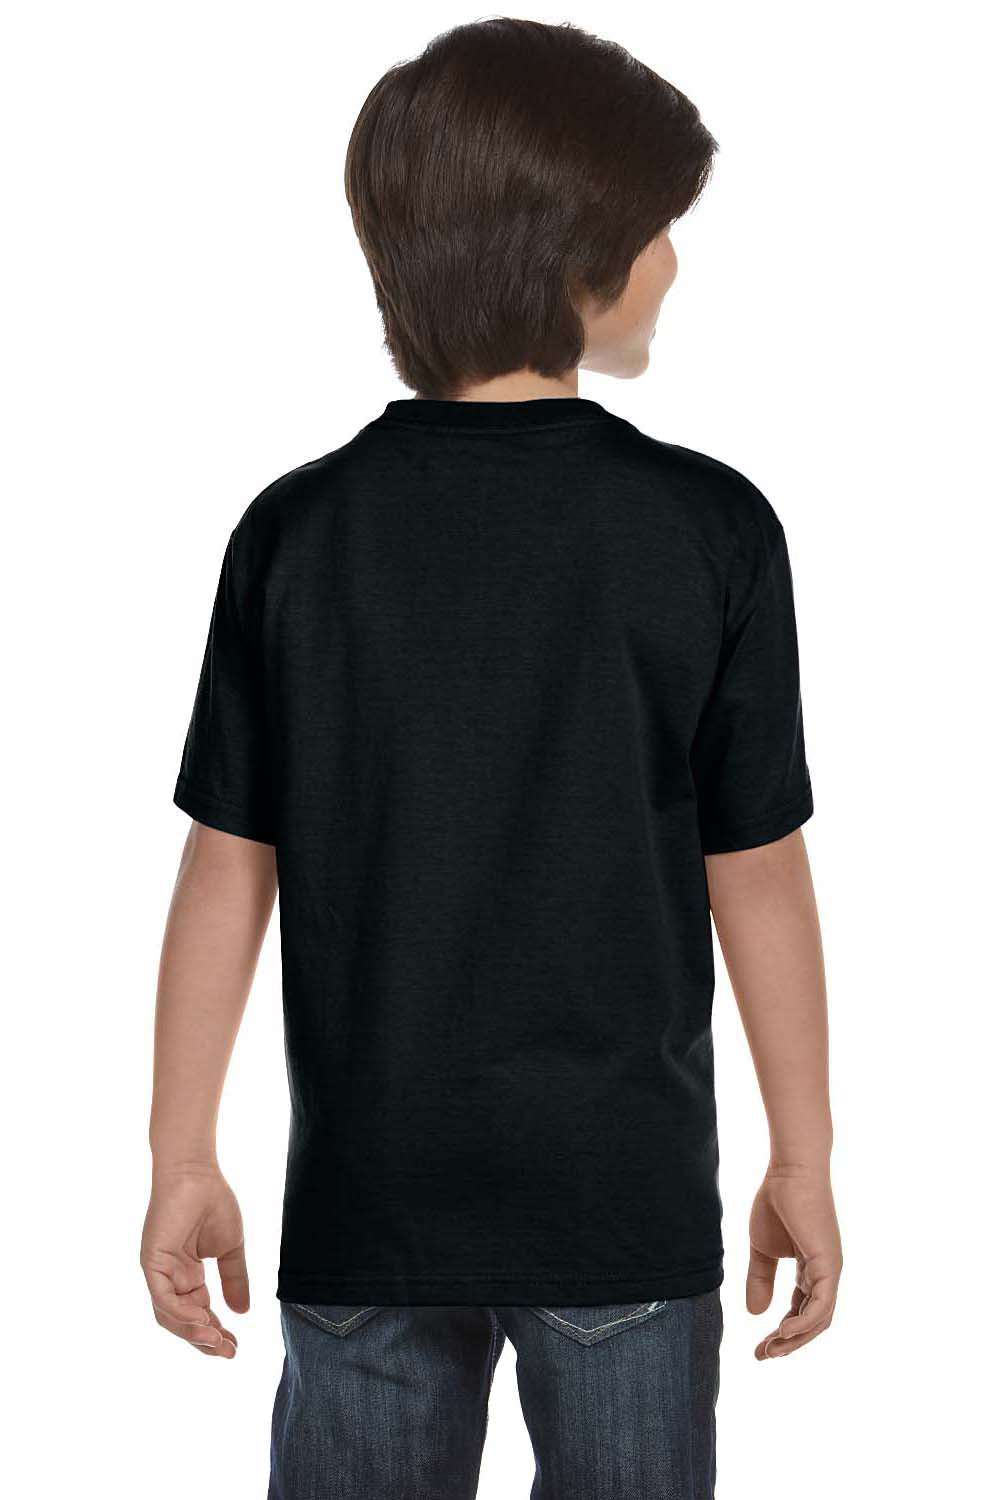 Gildan G800B Youth DryBlend Moisture Wicking Short Sleeve Crewneck T-Shirt Black Back